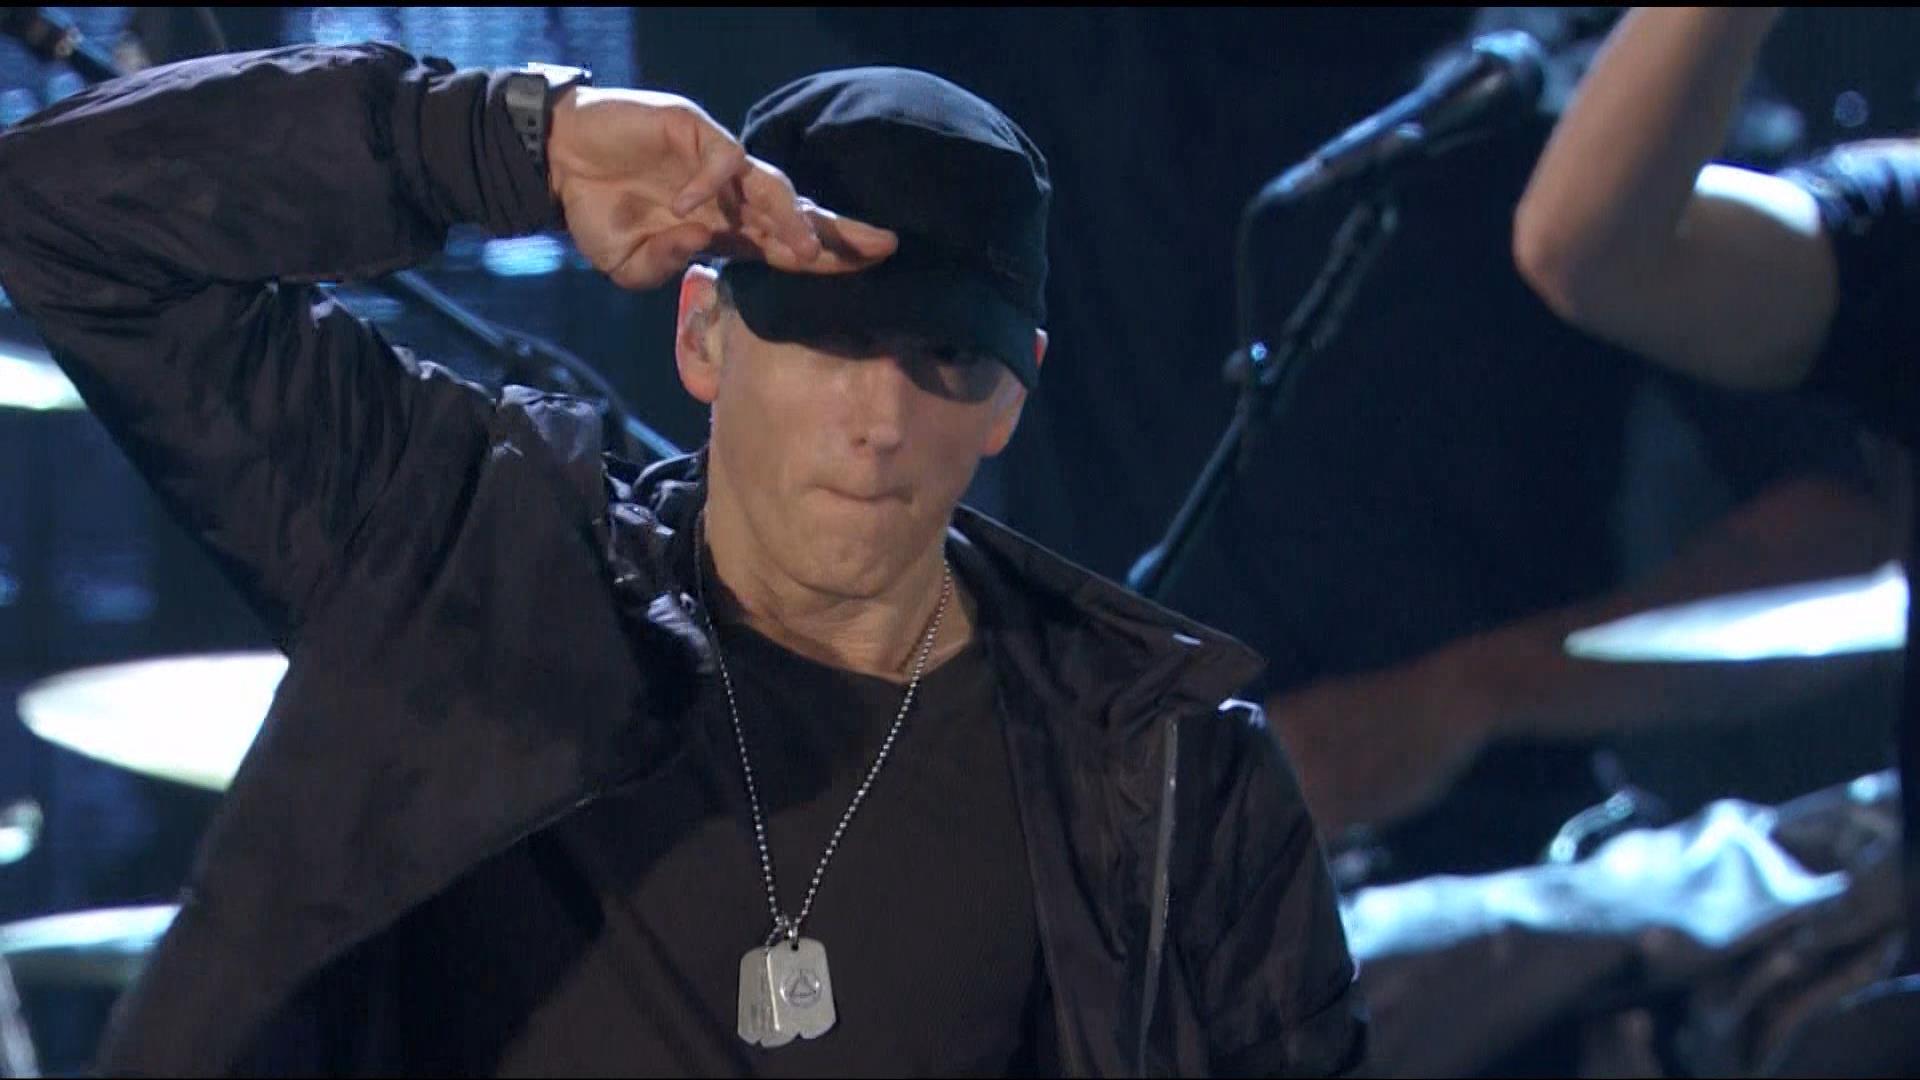 Eminem - The Monster ft. Rihanna, Guts Over Fear, Not Afraid & Lose Yourself live The Concert for Valor